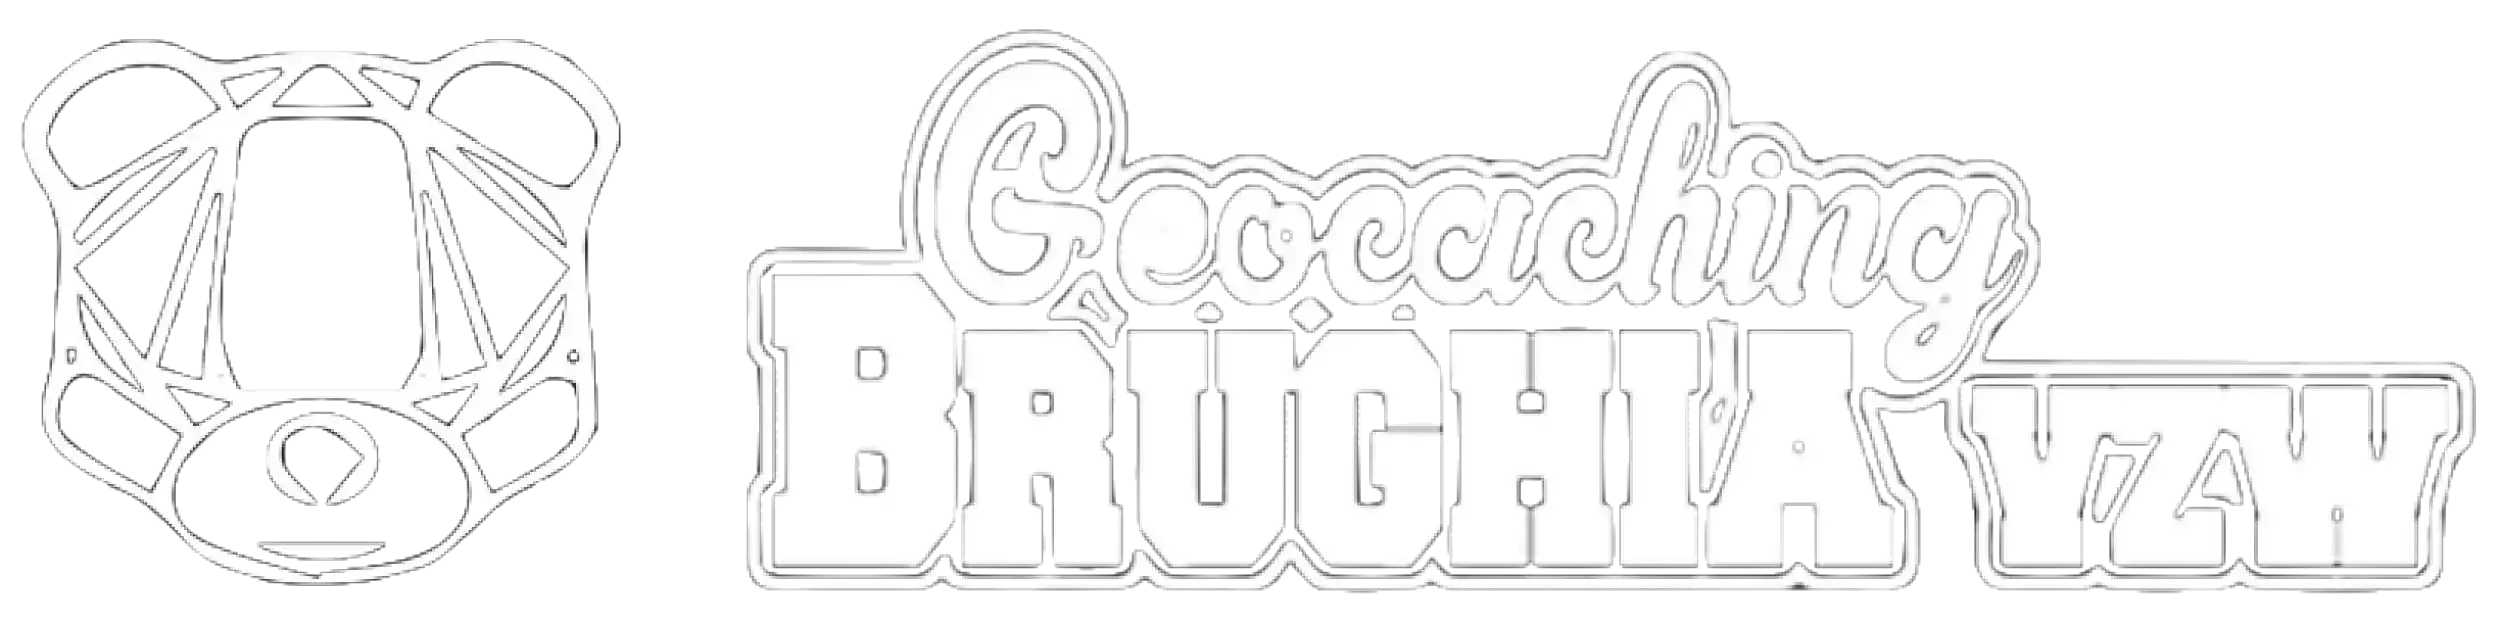 geocachingbrugia logo full